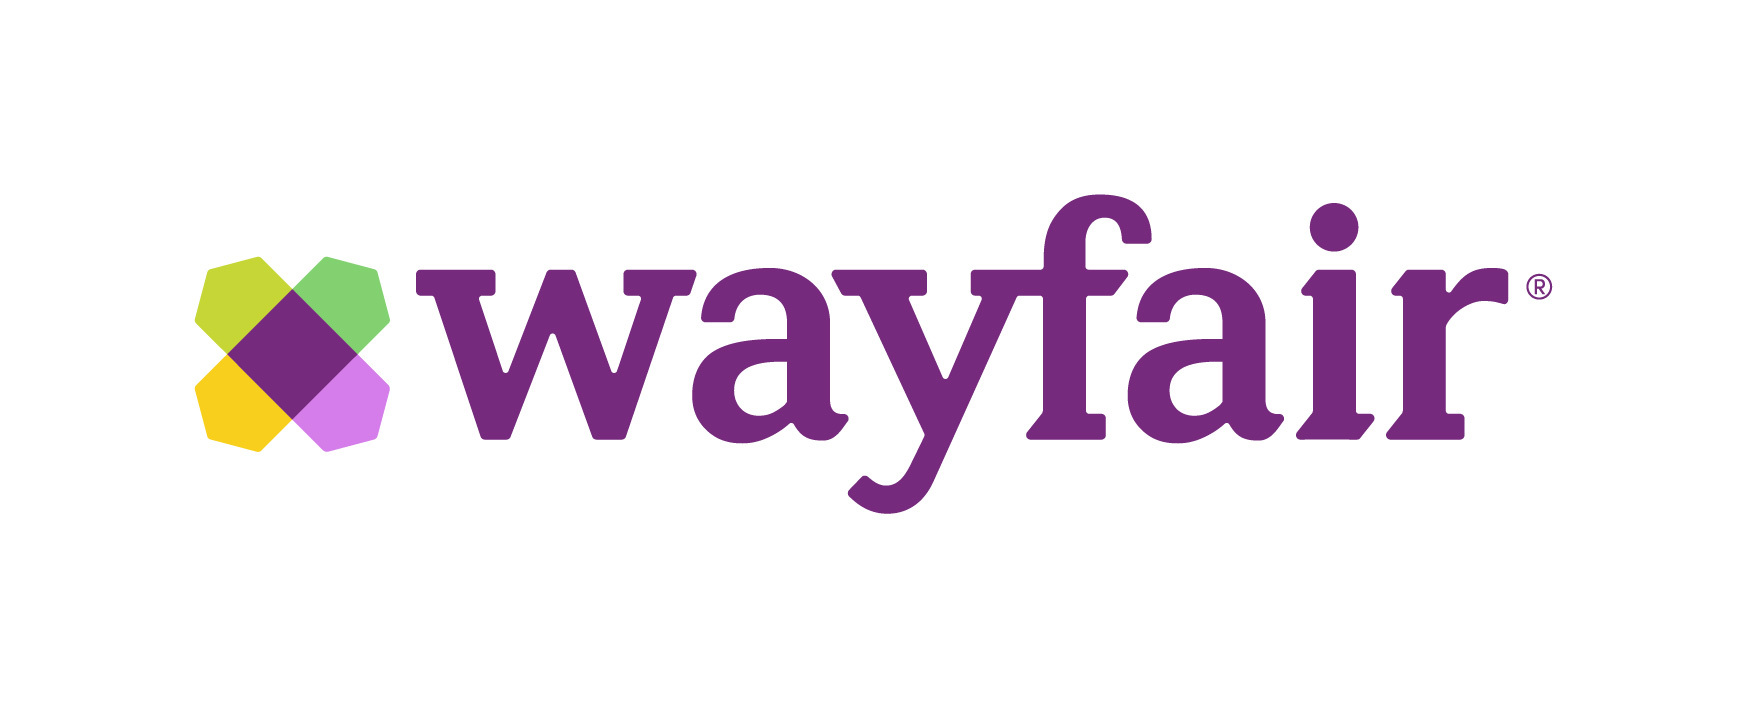 New Wayfair logo 1  5b47a5ace4e0f